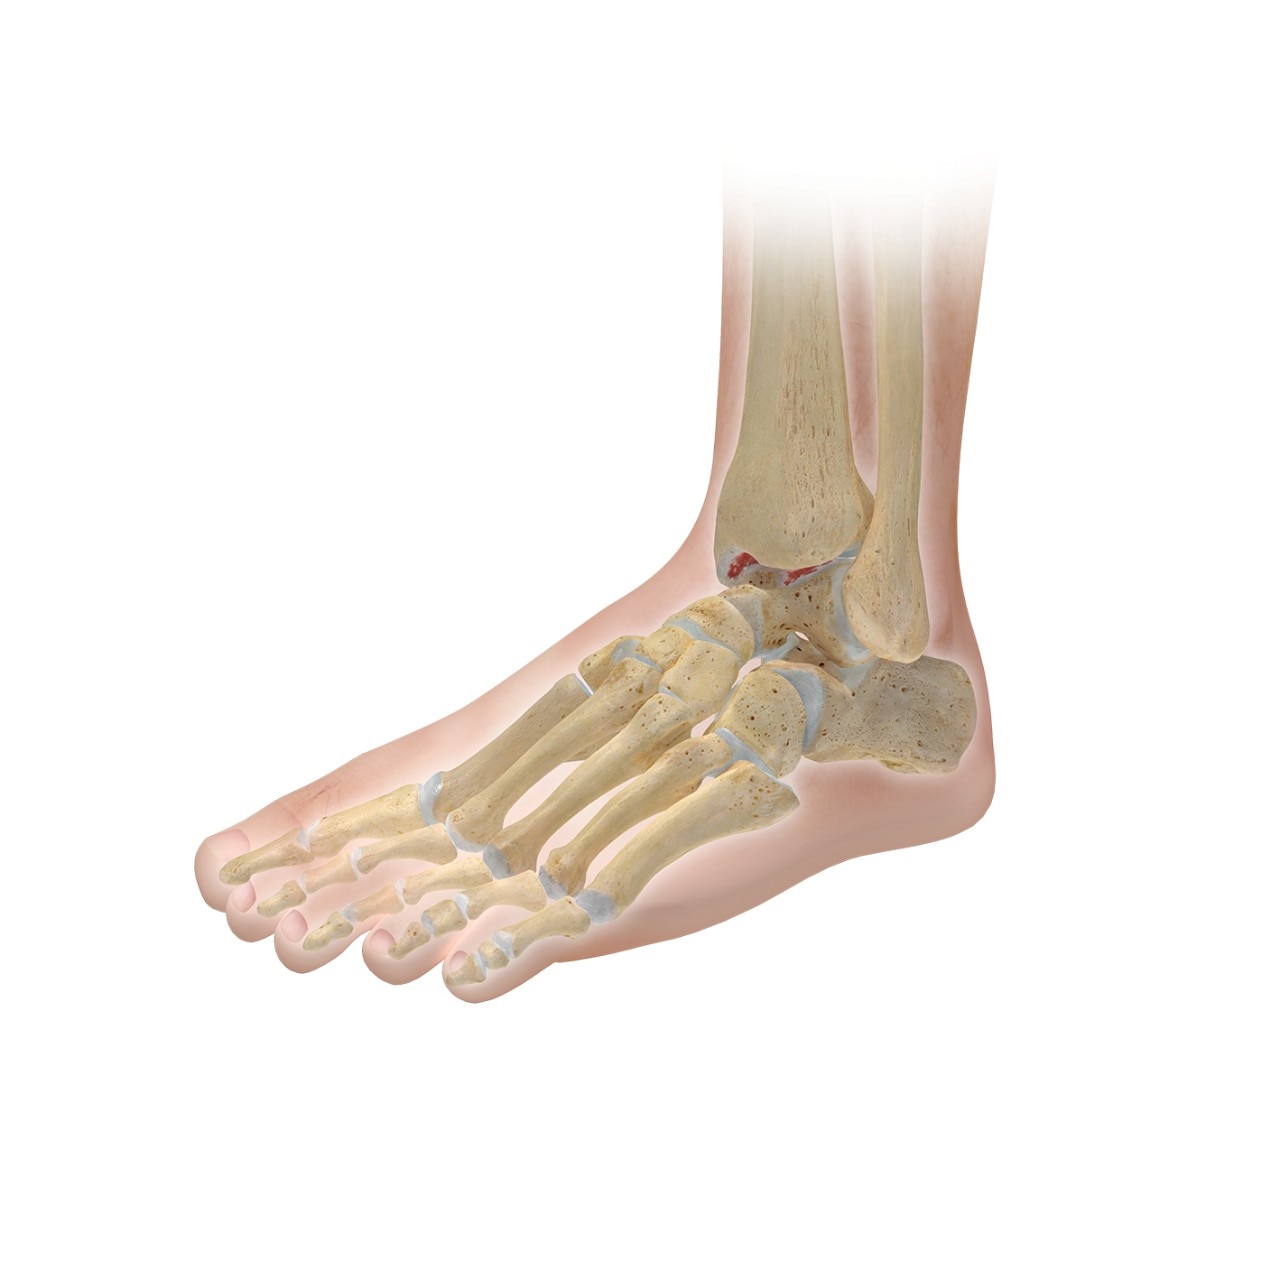 foot-illustration-arthritic